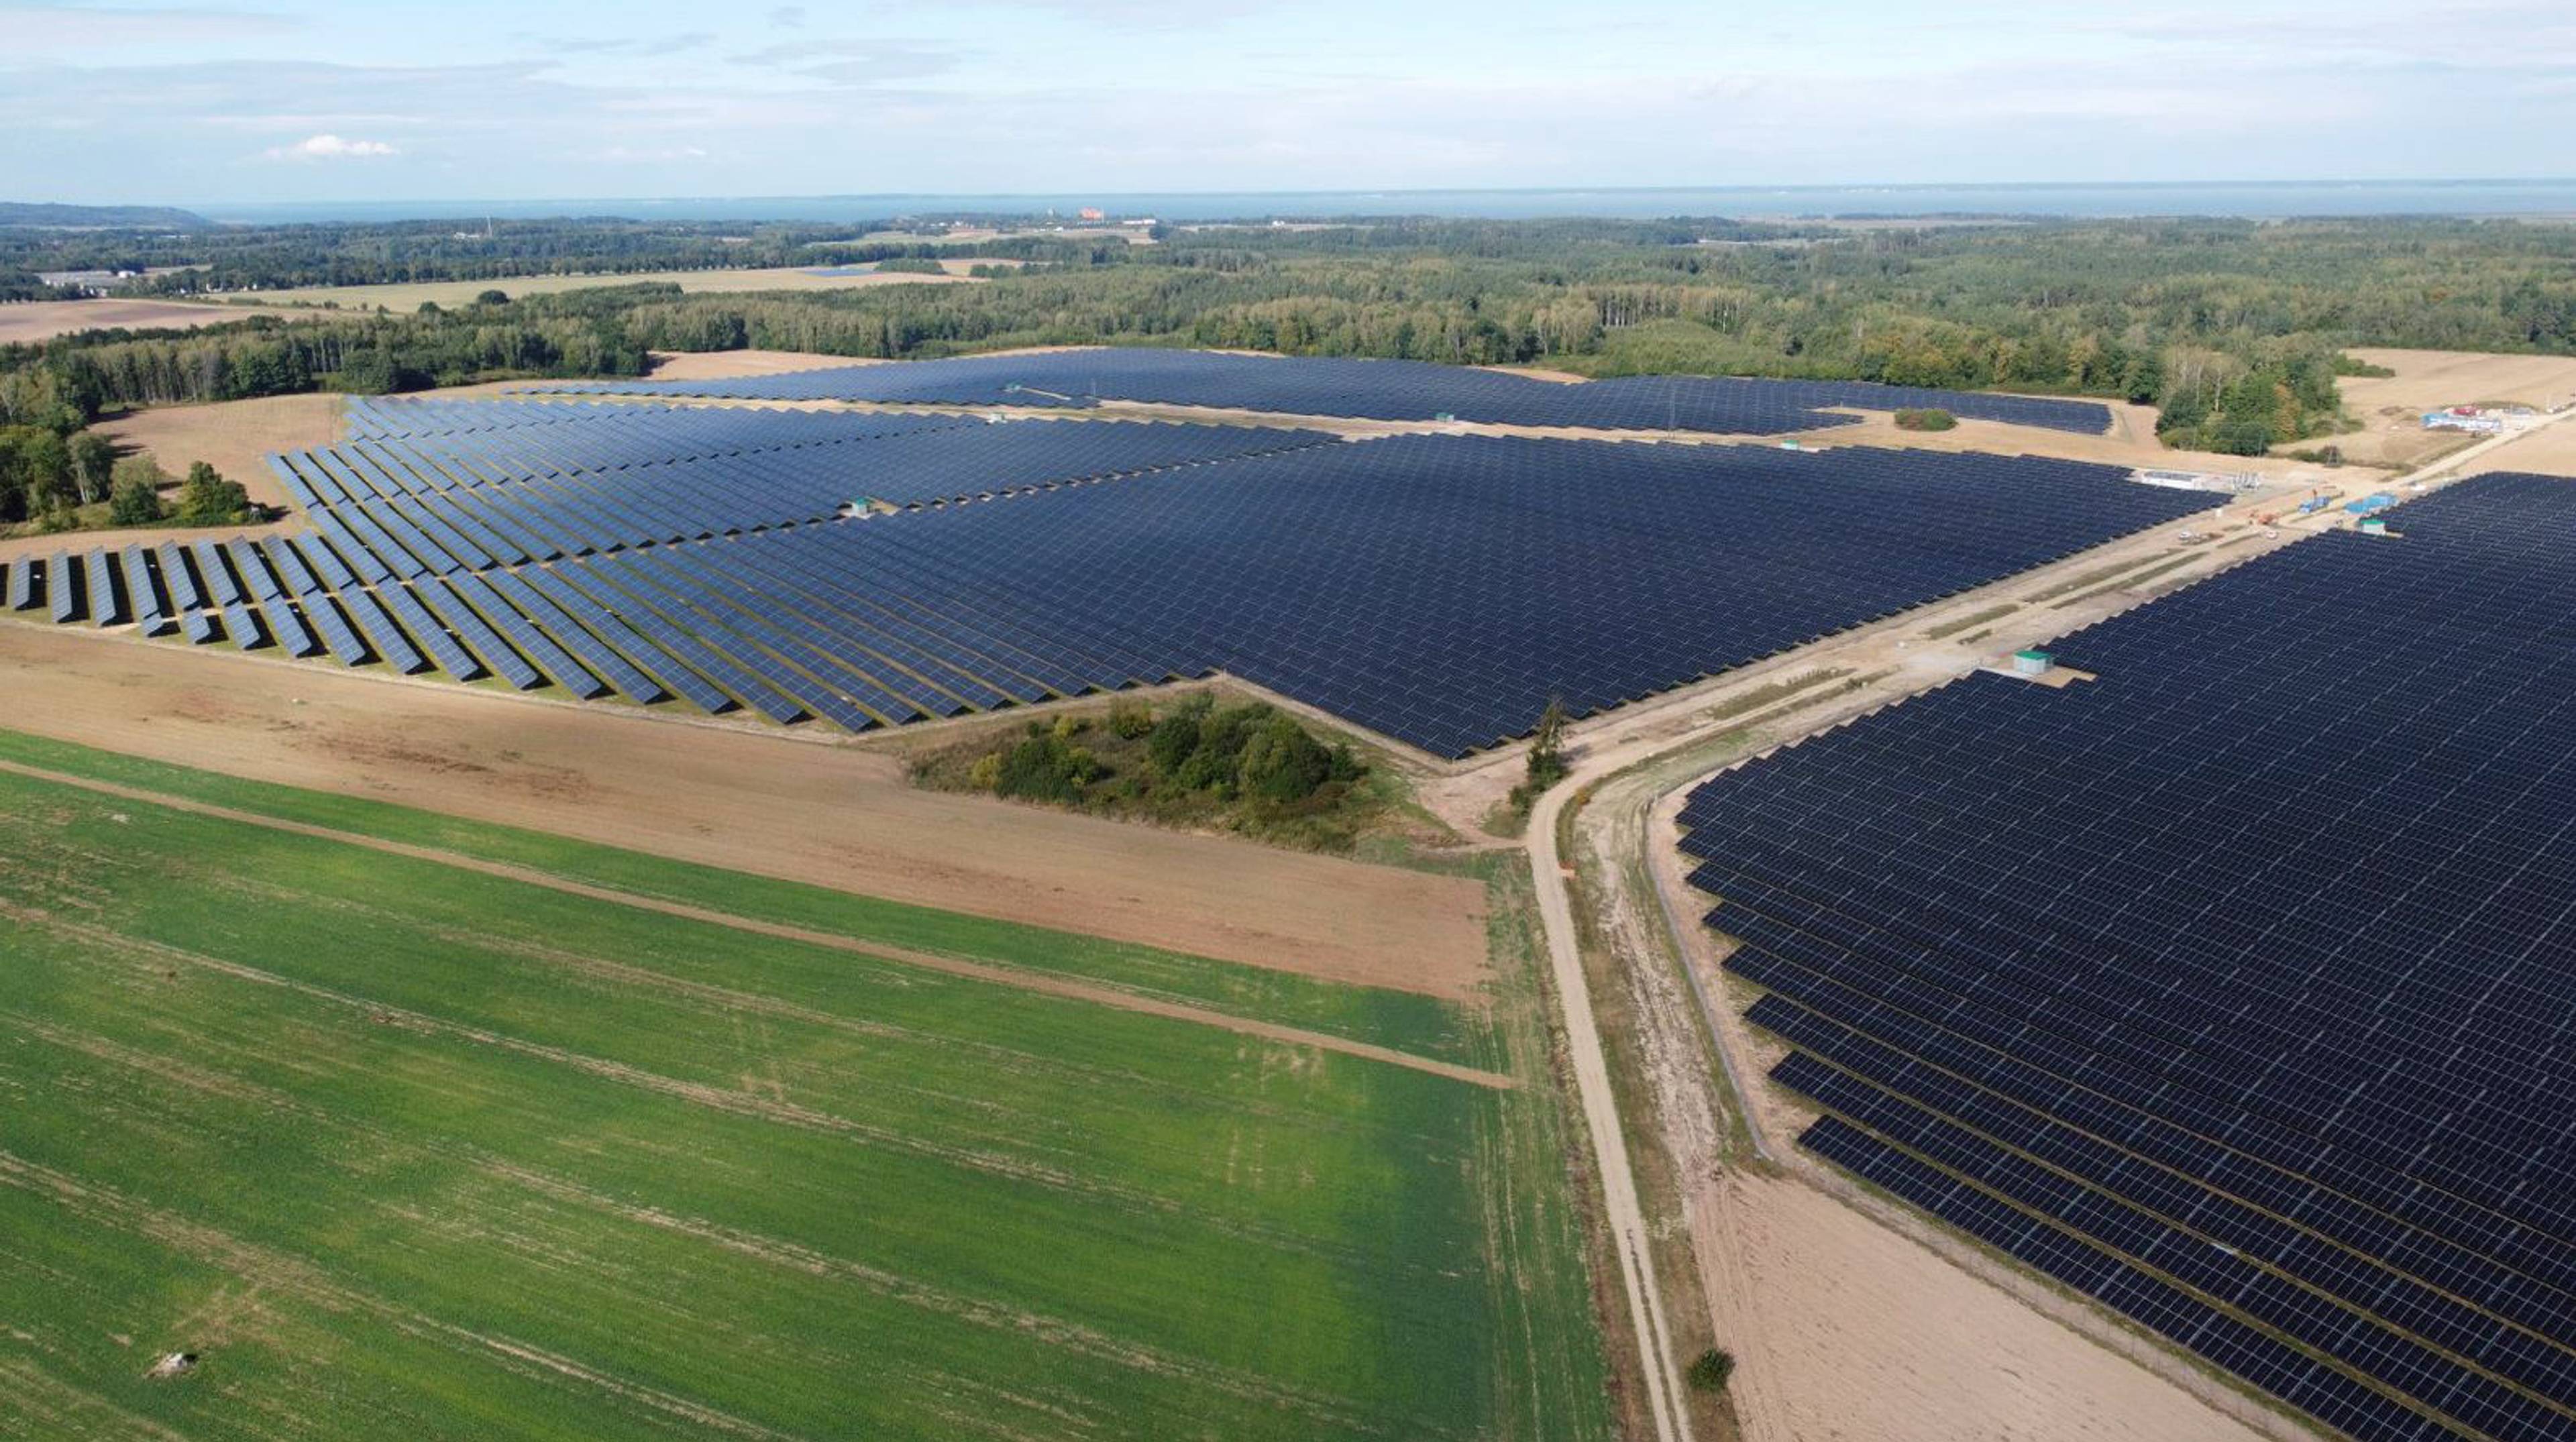 The Stępień solar plant in Poland.